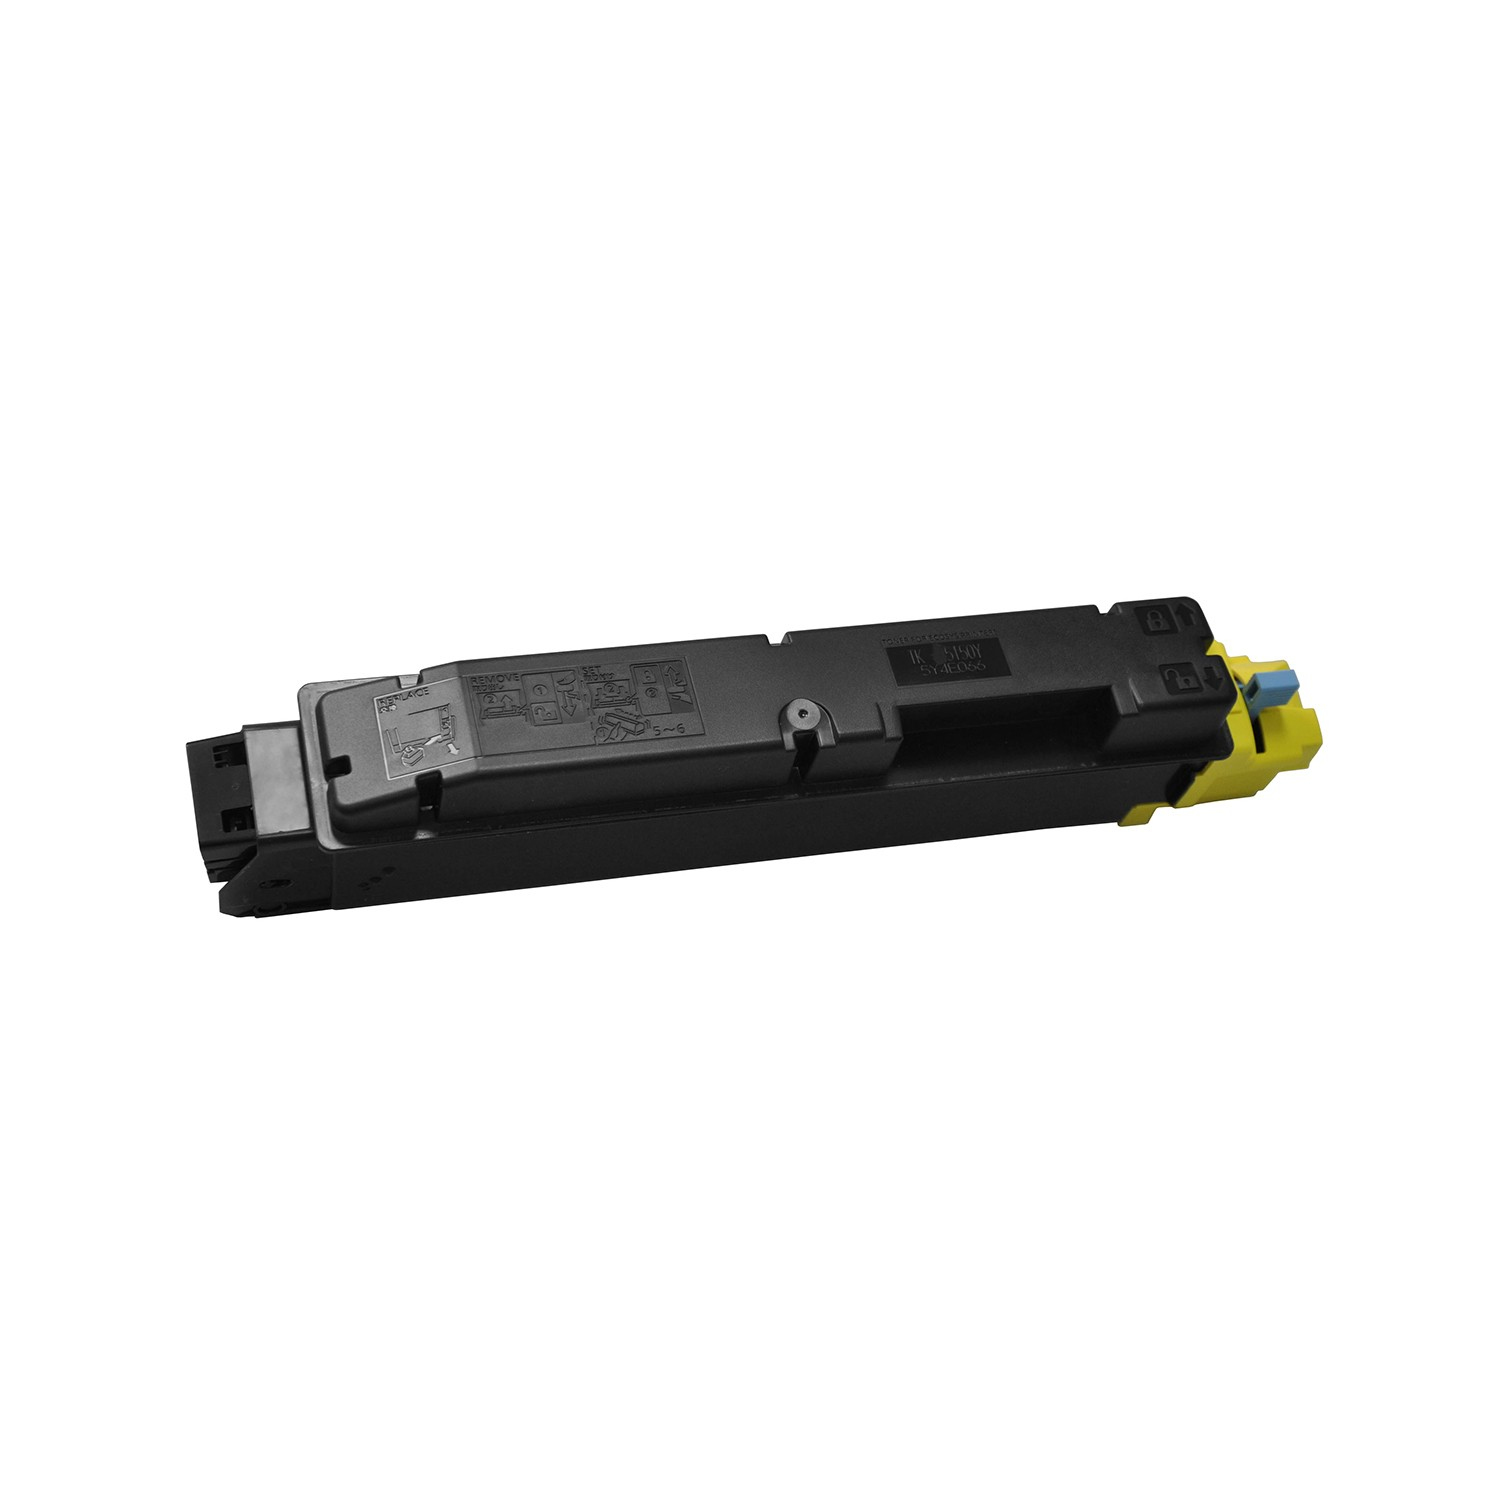 V7 Toner for selected Kyocera printers - Replacement for OEM cartridge part number TK-5150Y